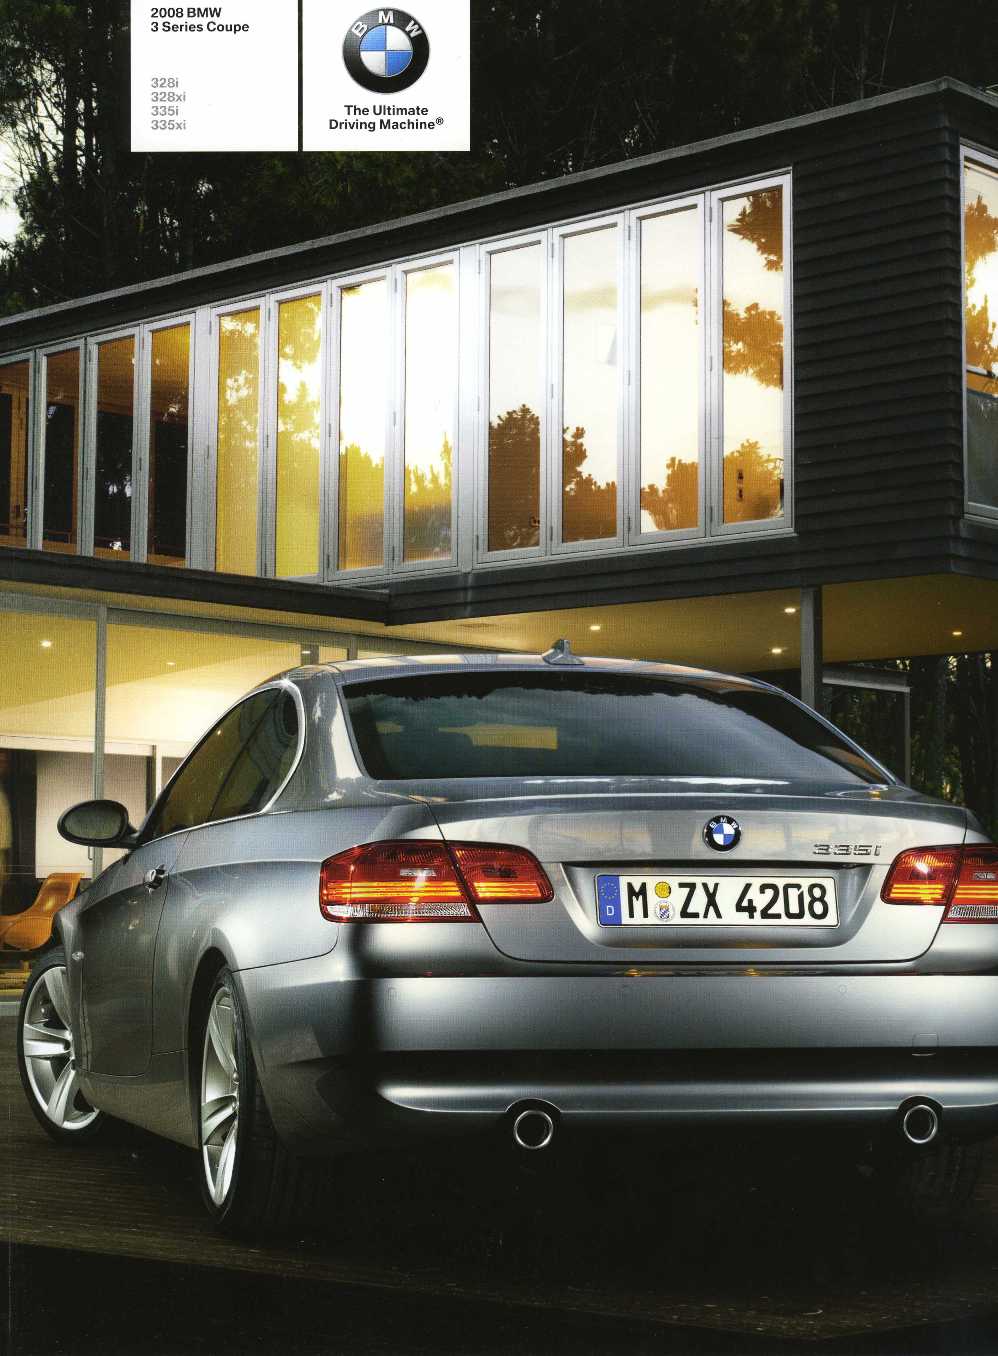 Brochure - 2008 BMW 3 Series Coupe 328i 328xi 335i 335xi - E92 (1st version)